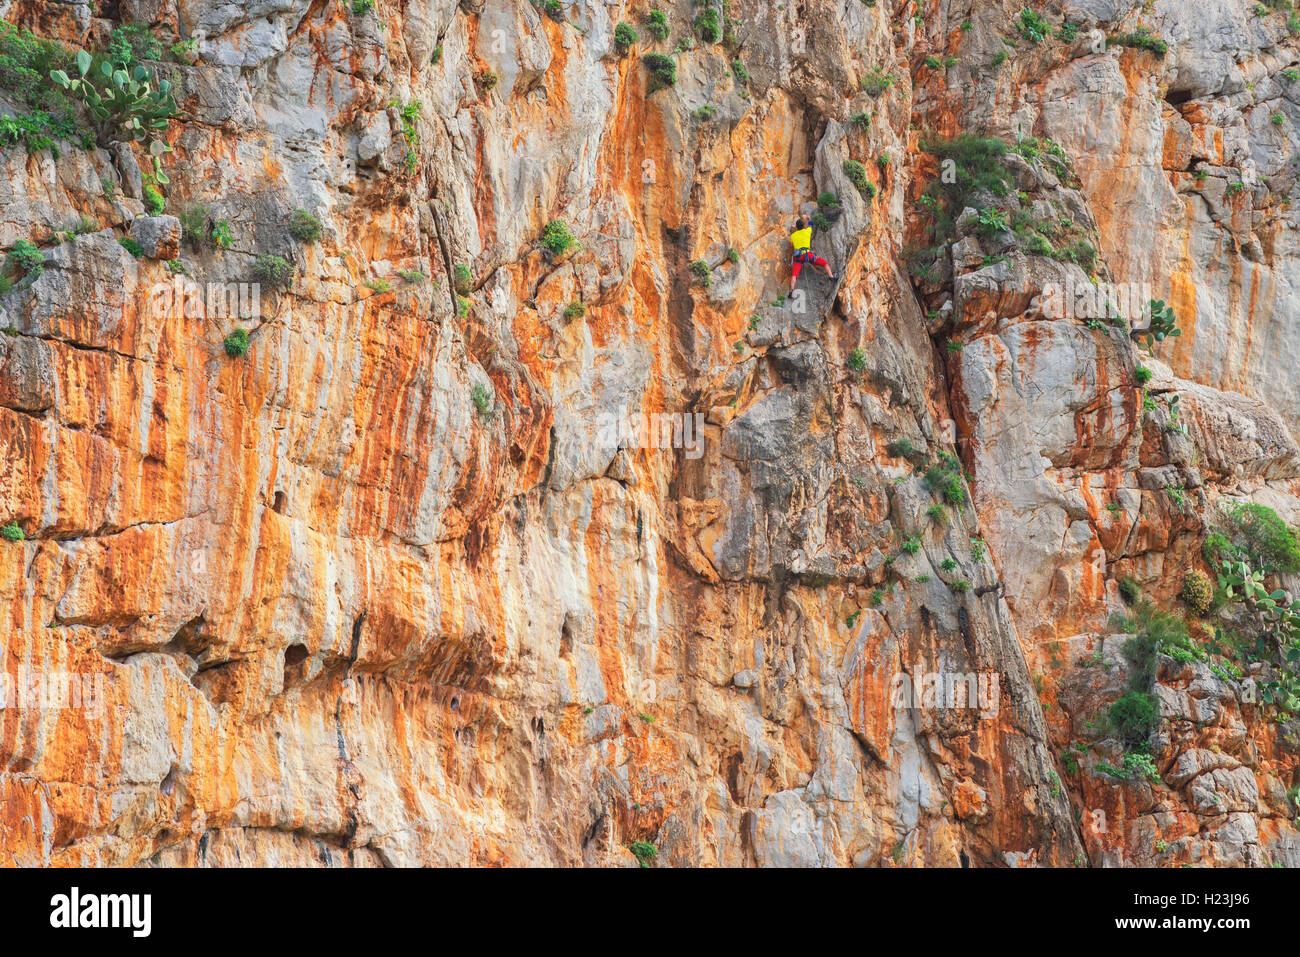 Man klettert auf Fels, Klettern Festival, San Vito Lo Capo, Sizilien, Italien Stockfoto